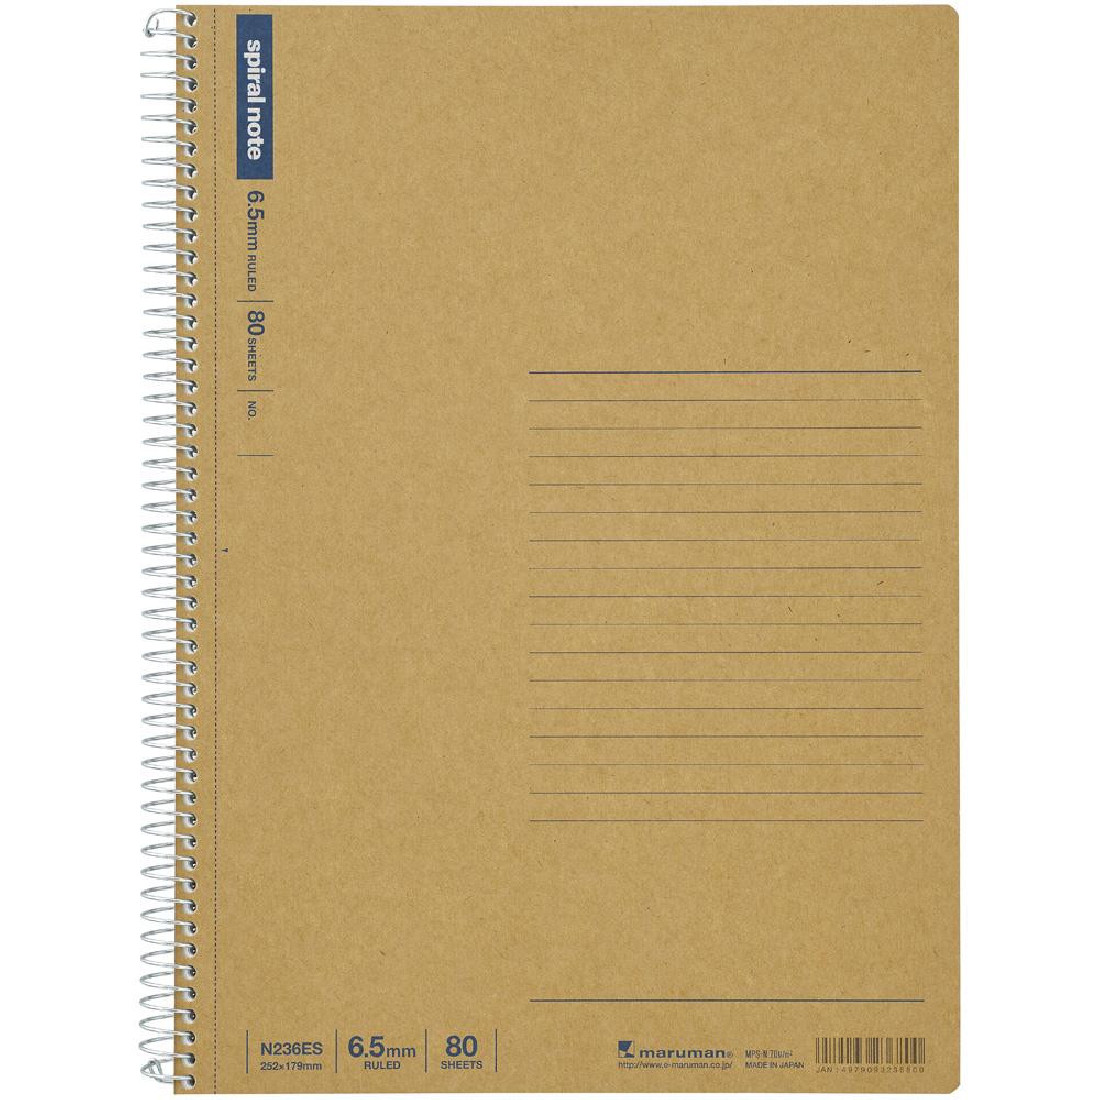 Maruman B5 spiral notebook ruled paper 80 sheets N236ES